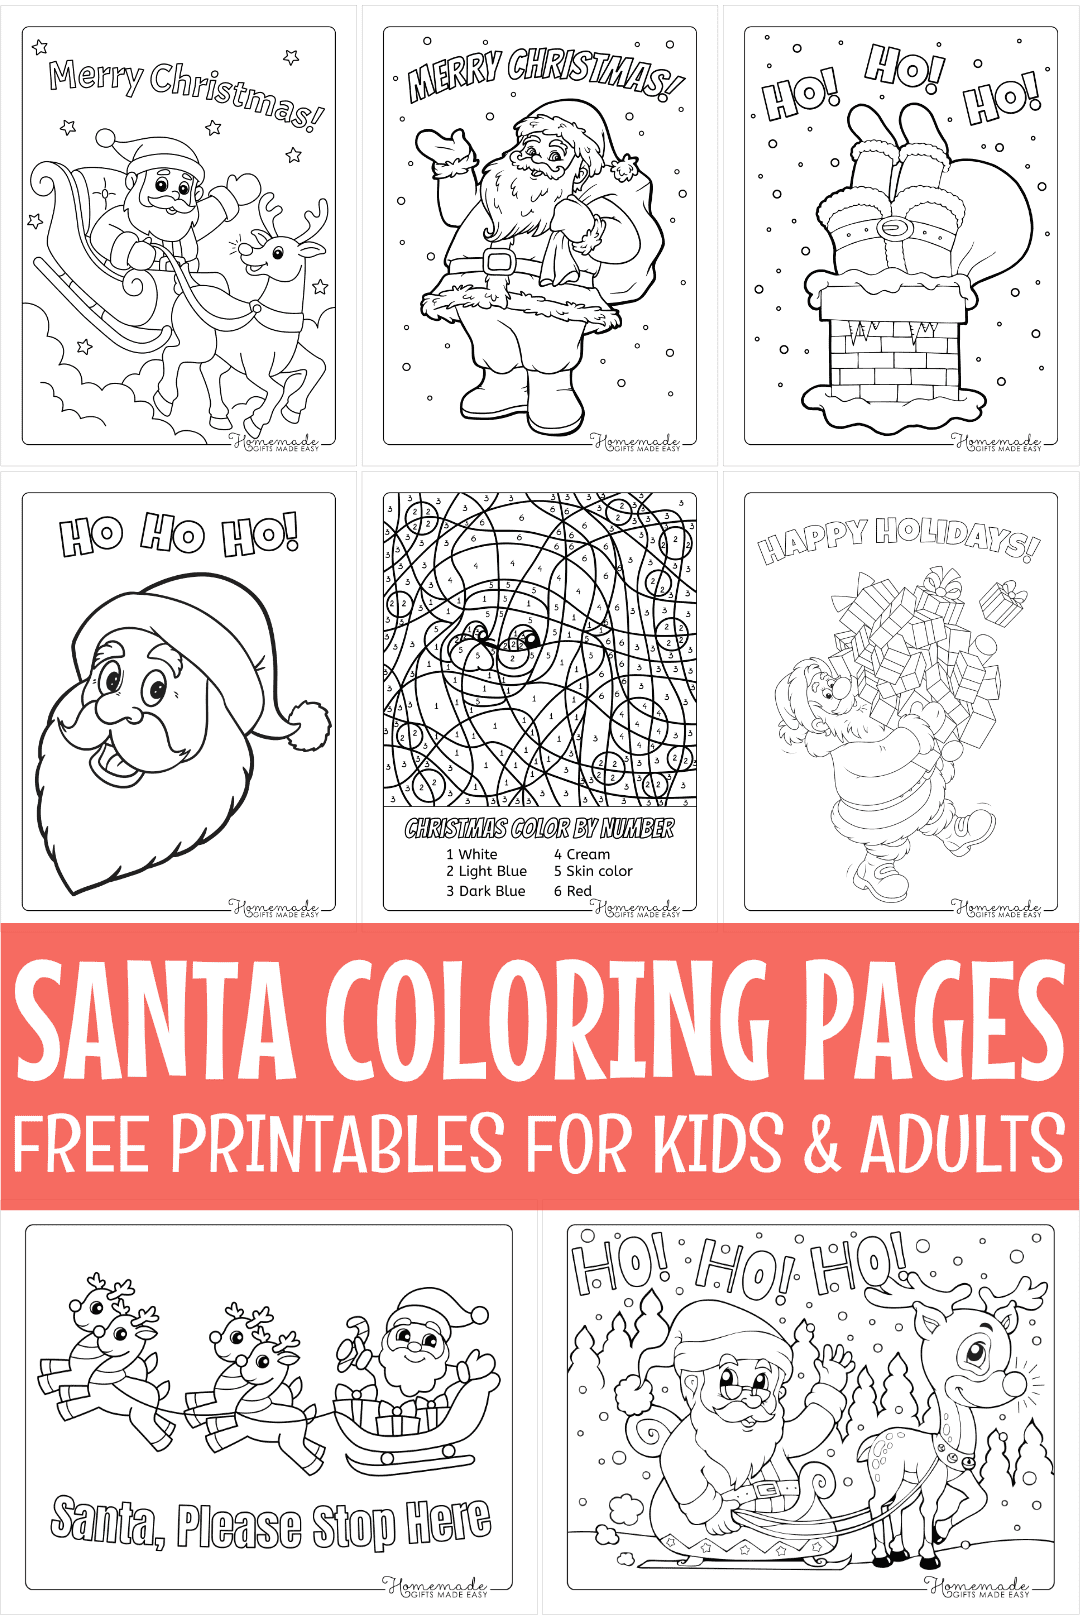 free printable santa coloring pages - 50 designs